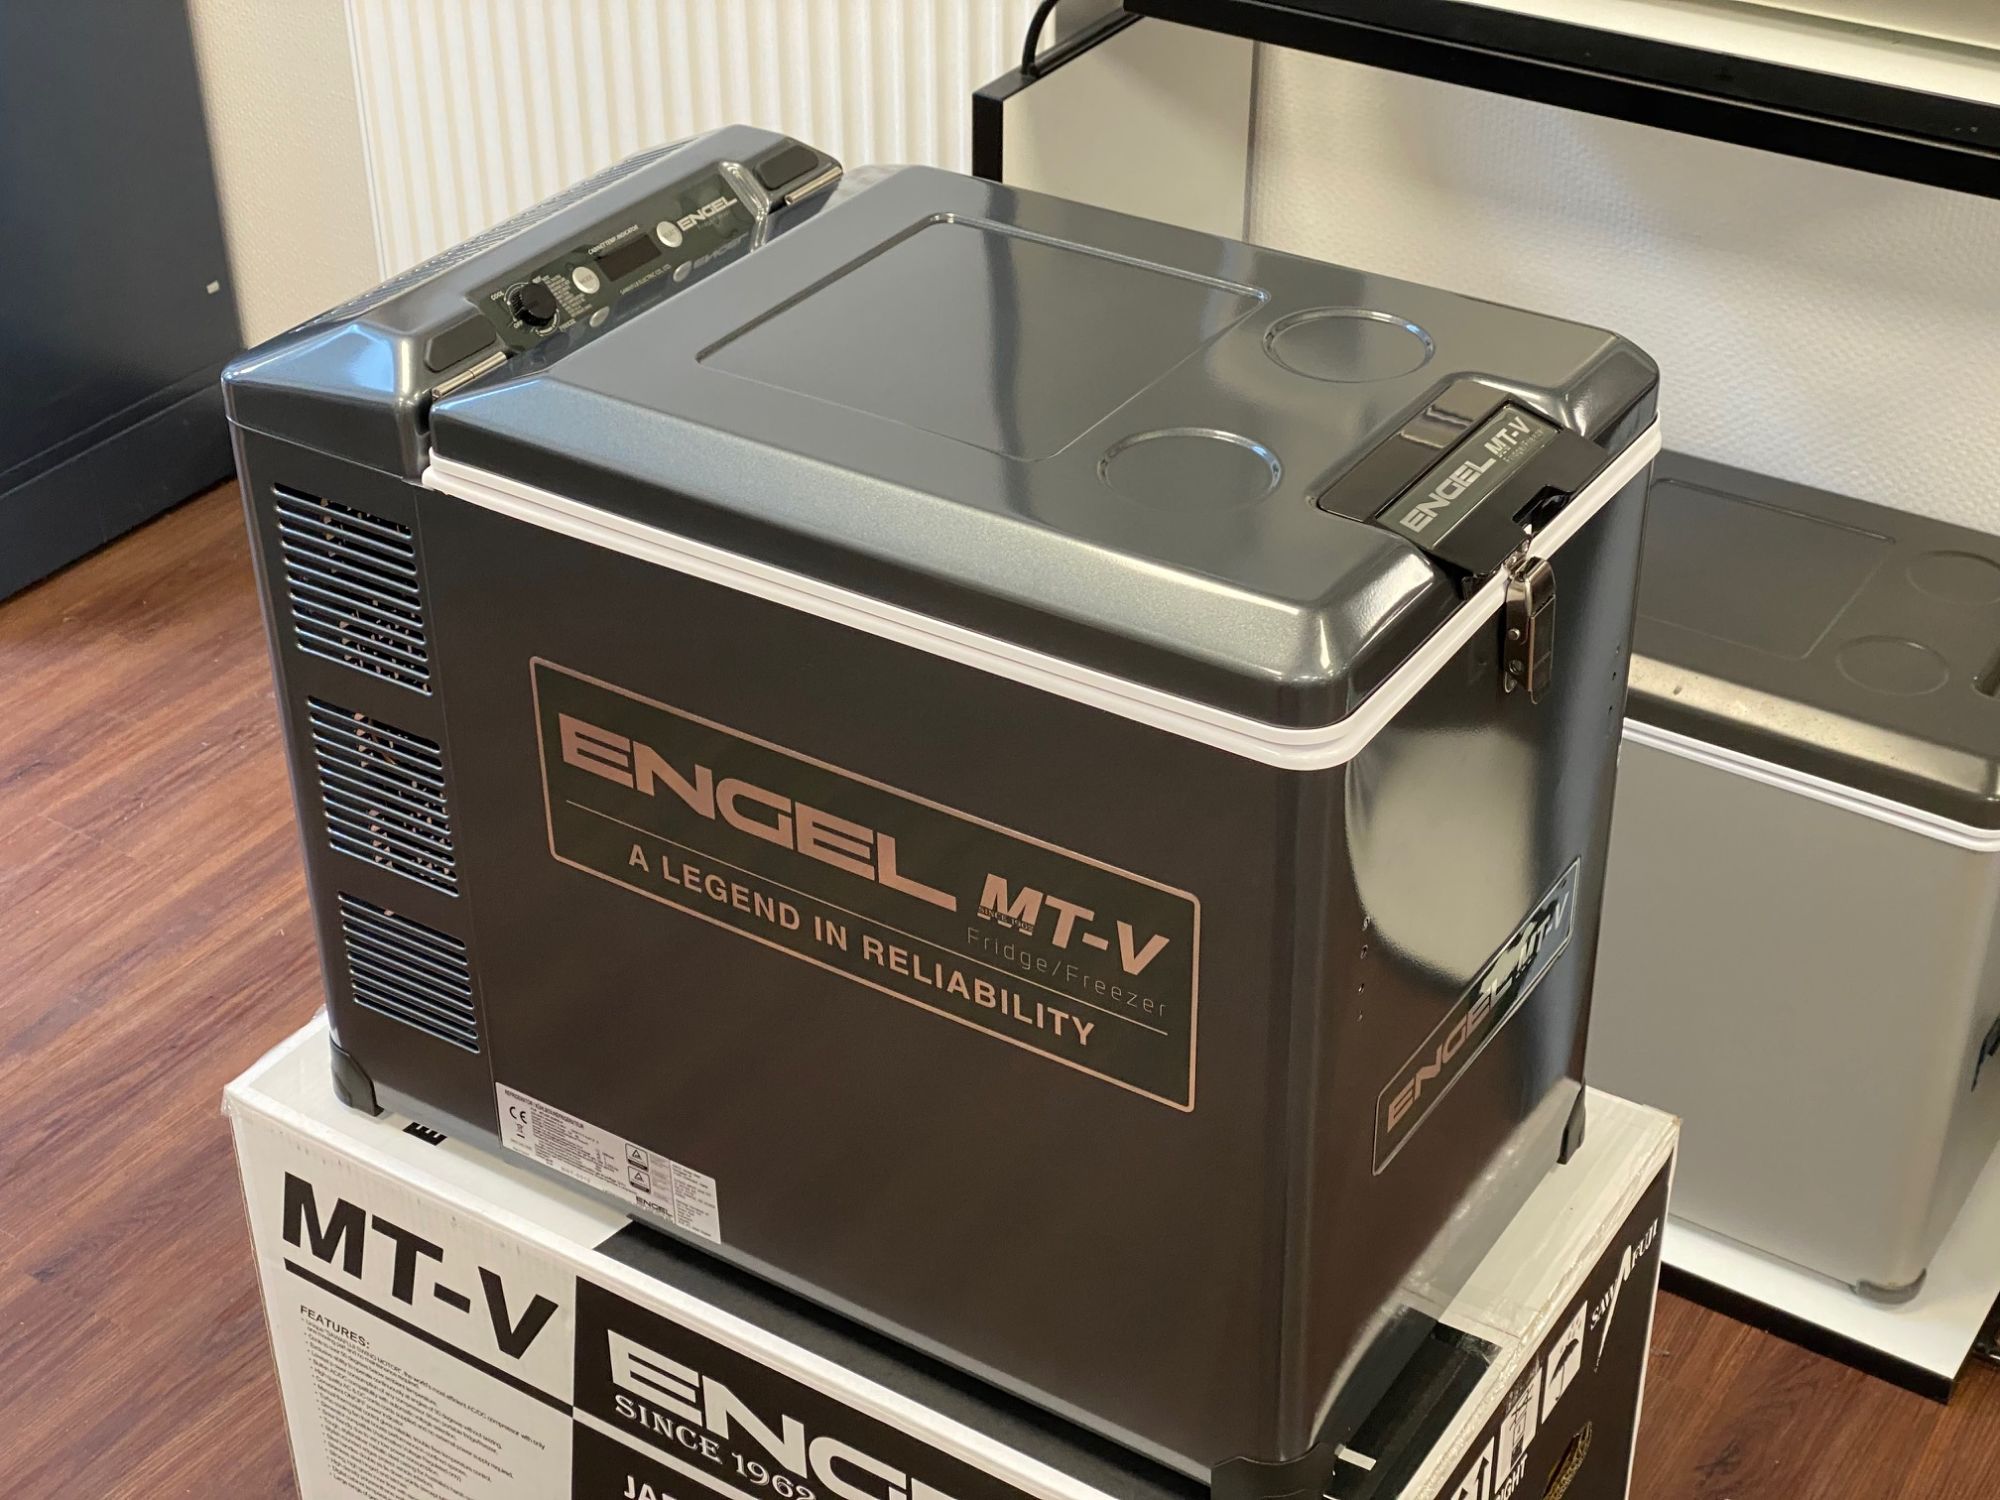 Kompressor-Kühlbox Engel MT45F-V mit Digitalanzeige